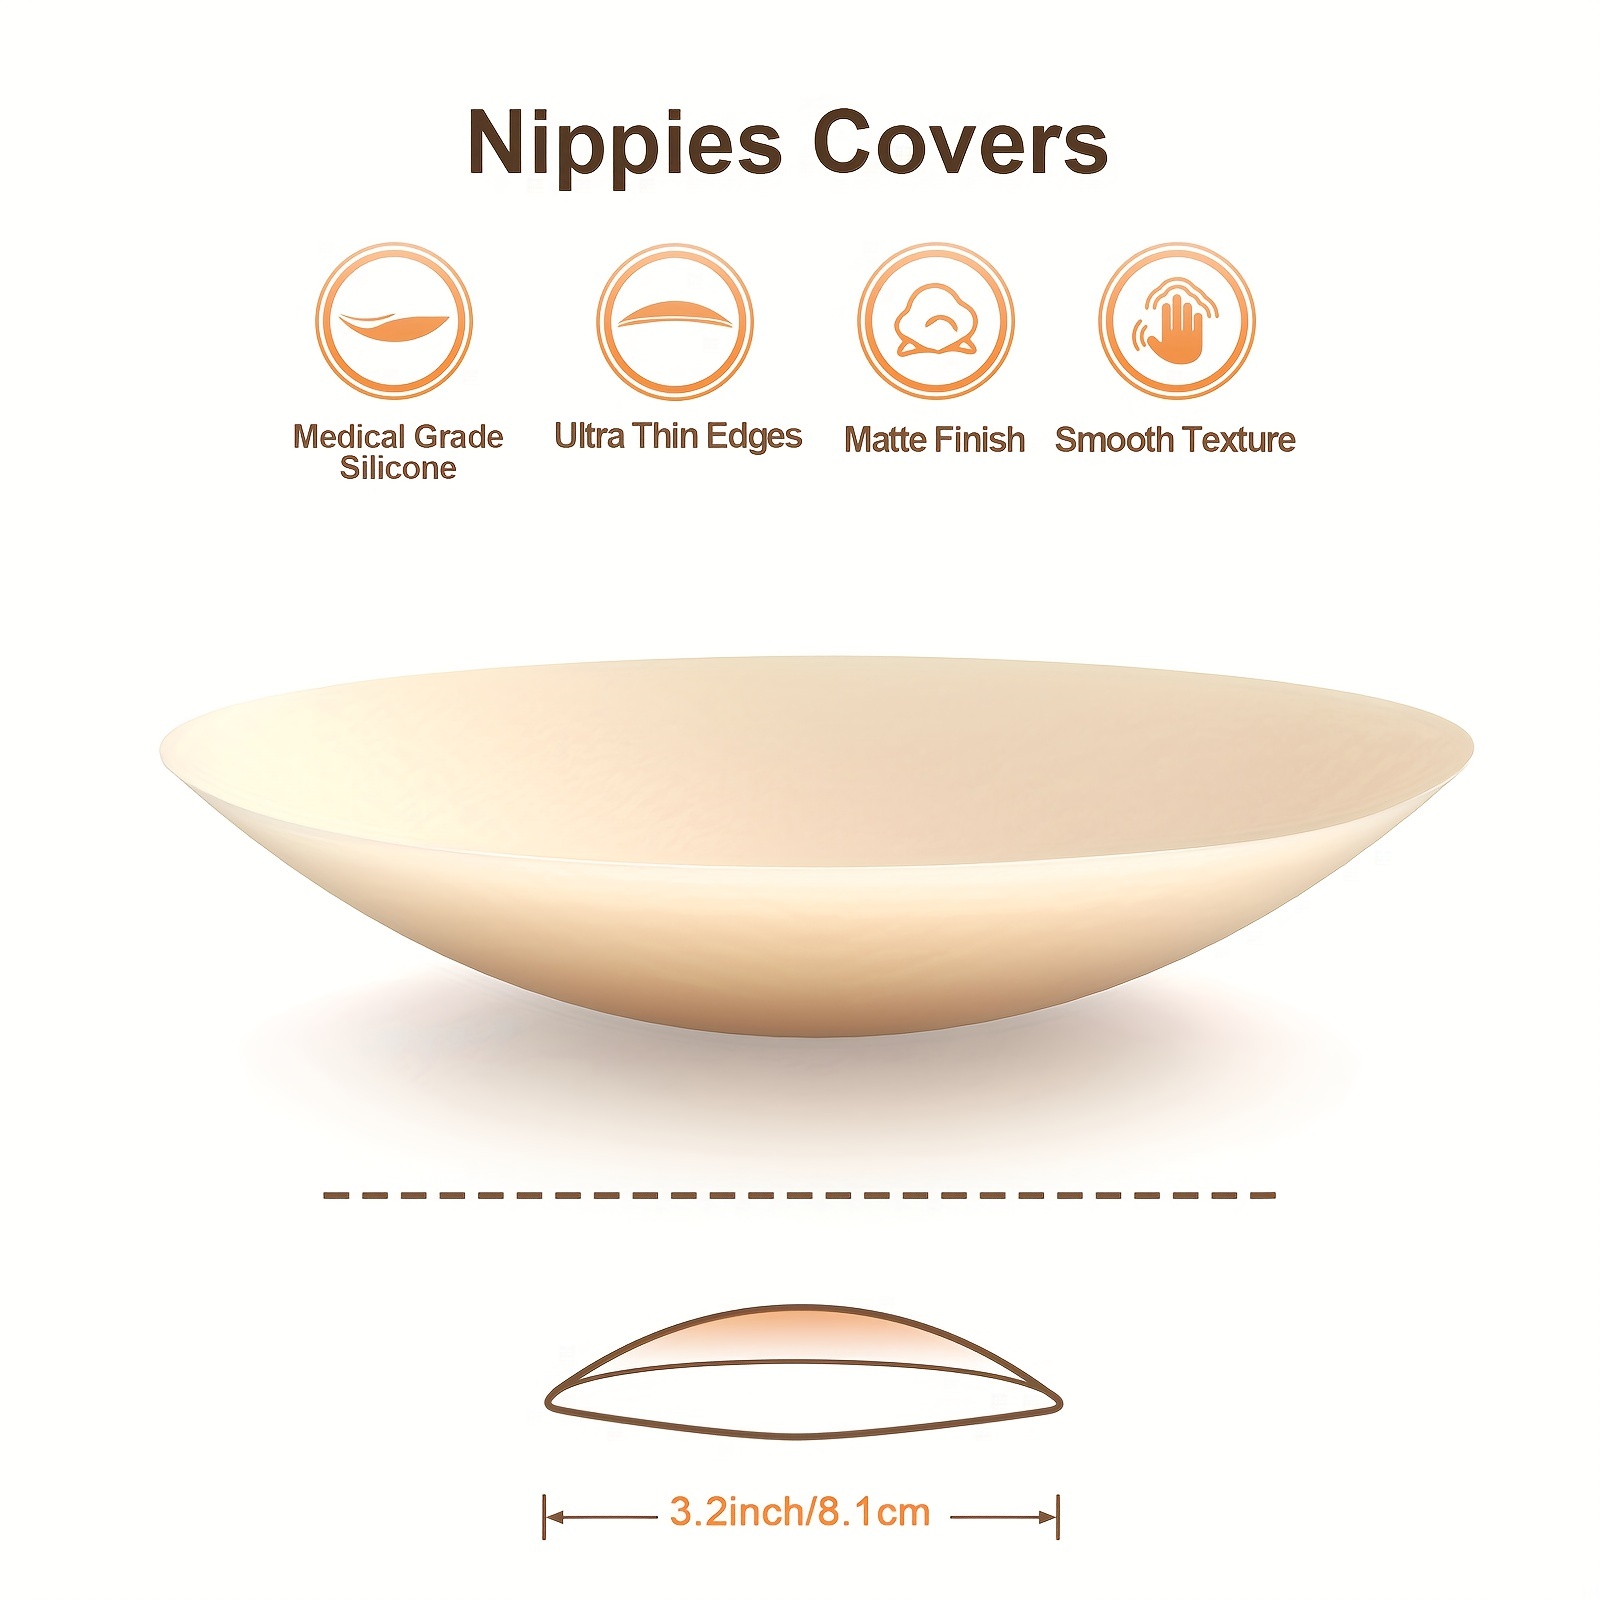 Satin nipple covers, Miiyu, Shop Women's Lingerie Accessories Online